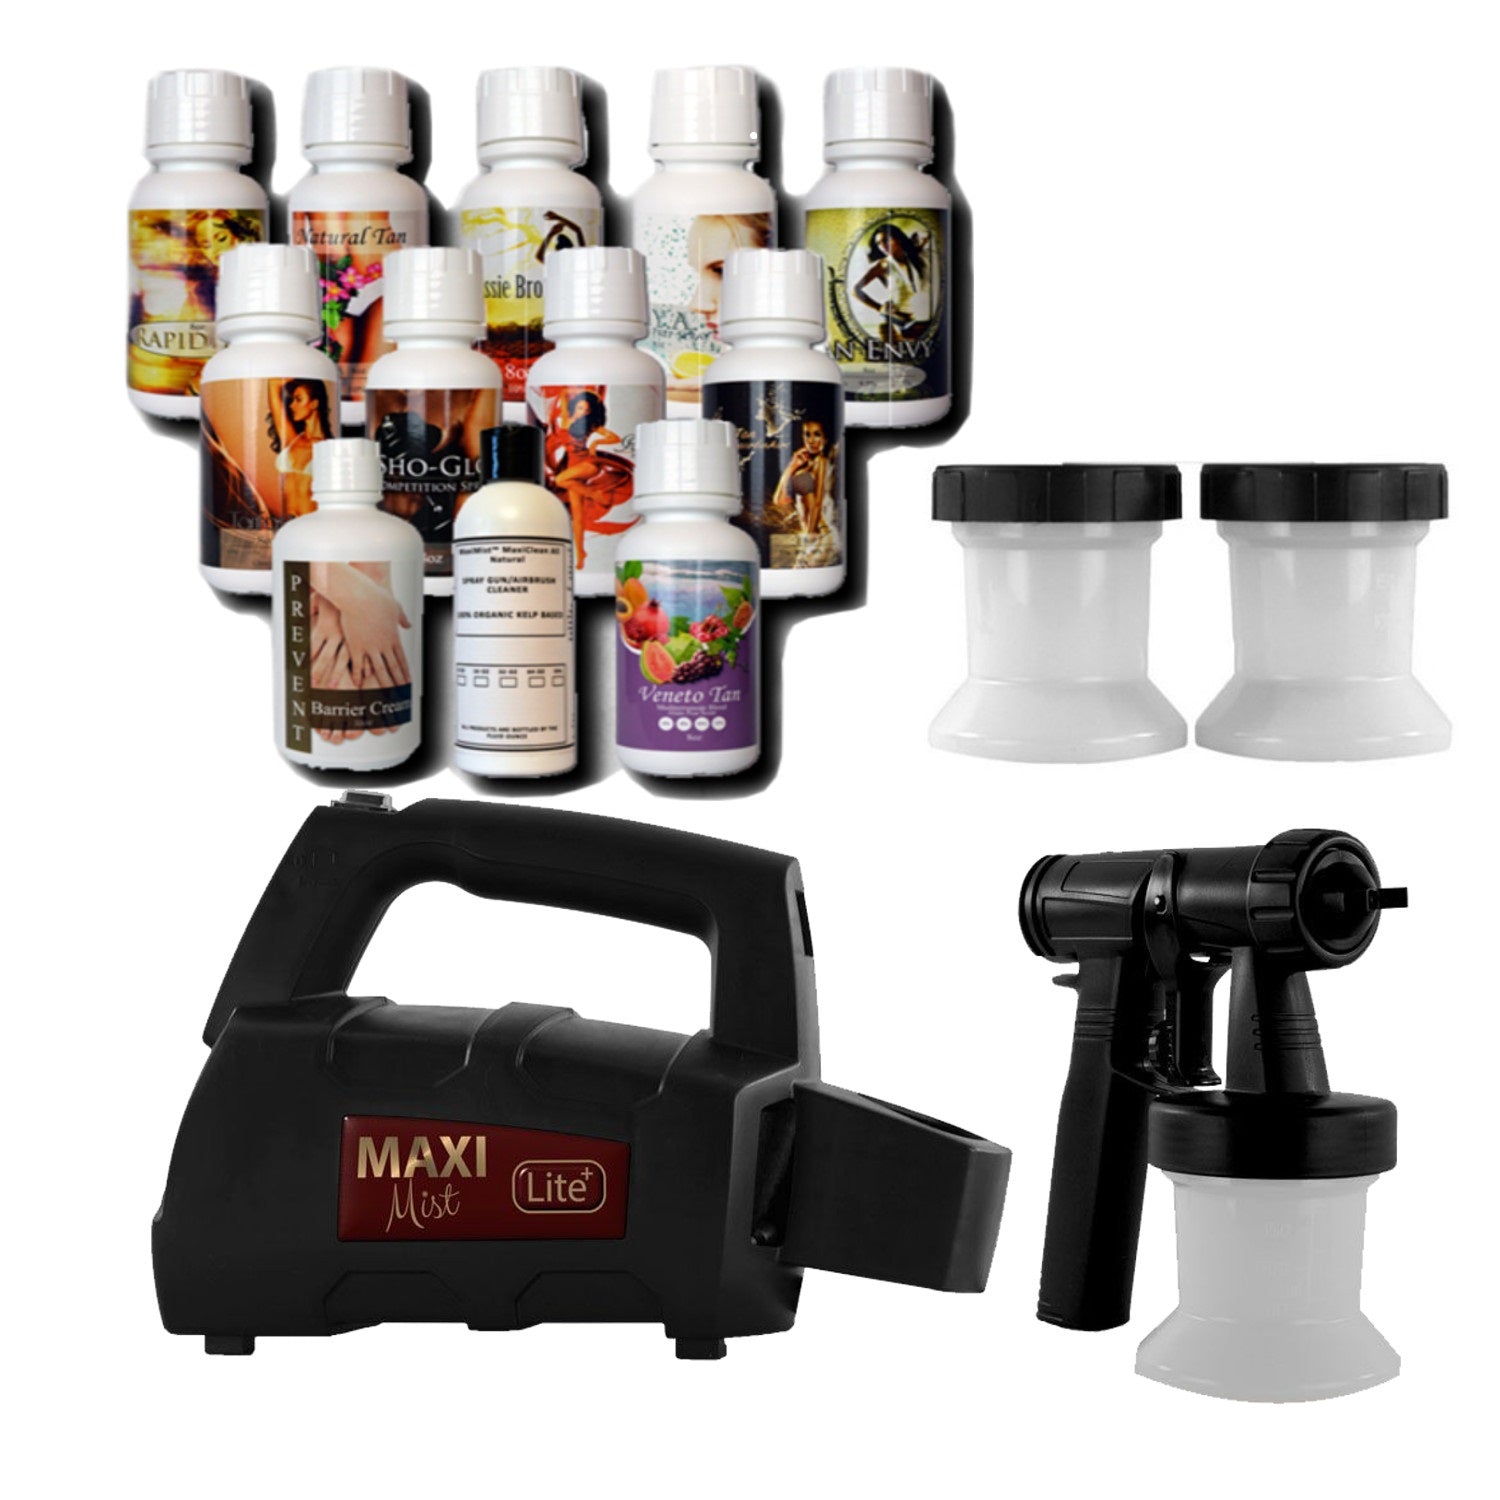 MaxiMist Lite Plus HVLP Spray Tanning System